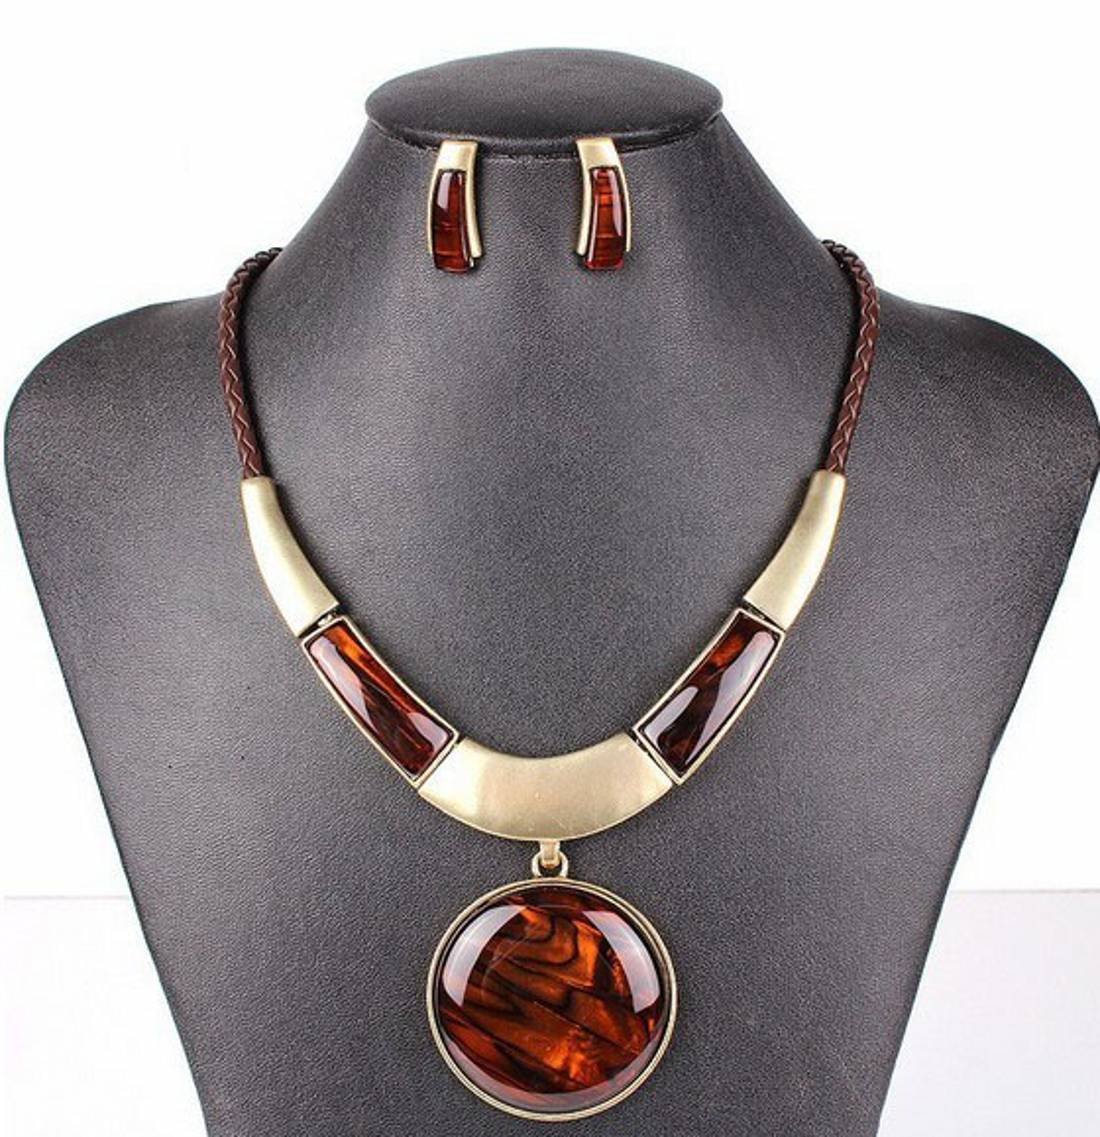 Kundan Fashion jewelry necklace set ~ South India Jewels